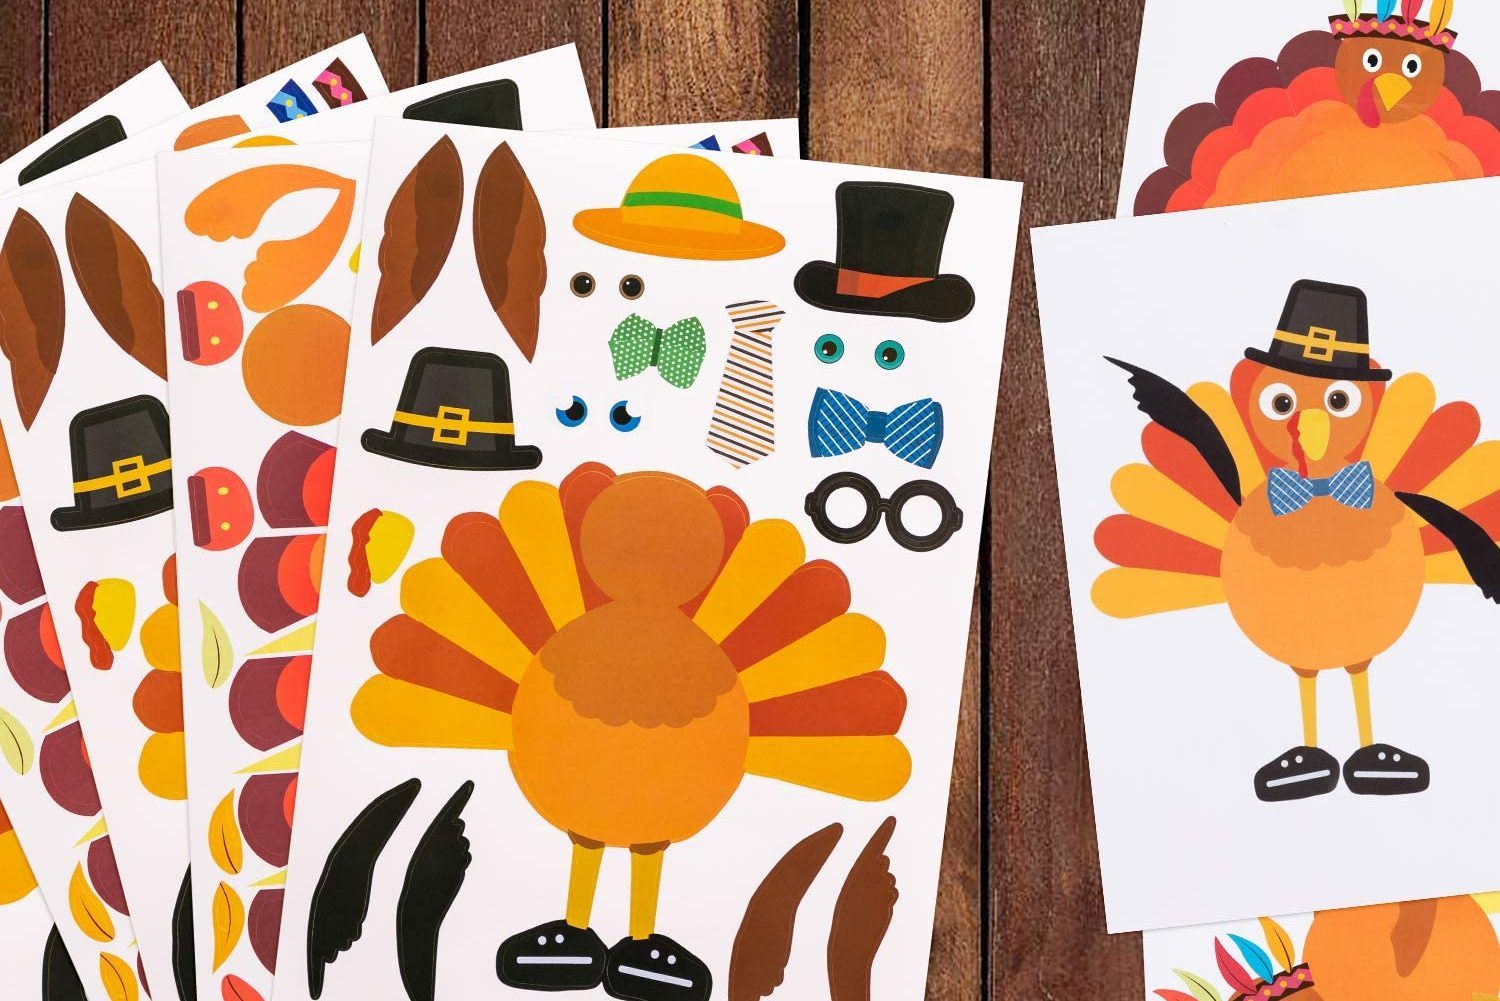 Turkey Stickers